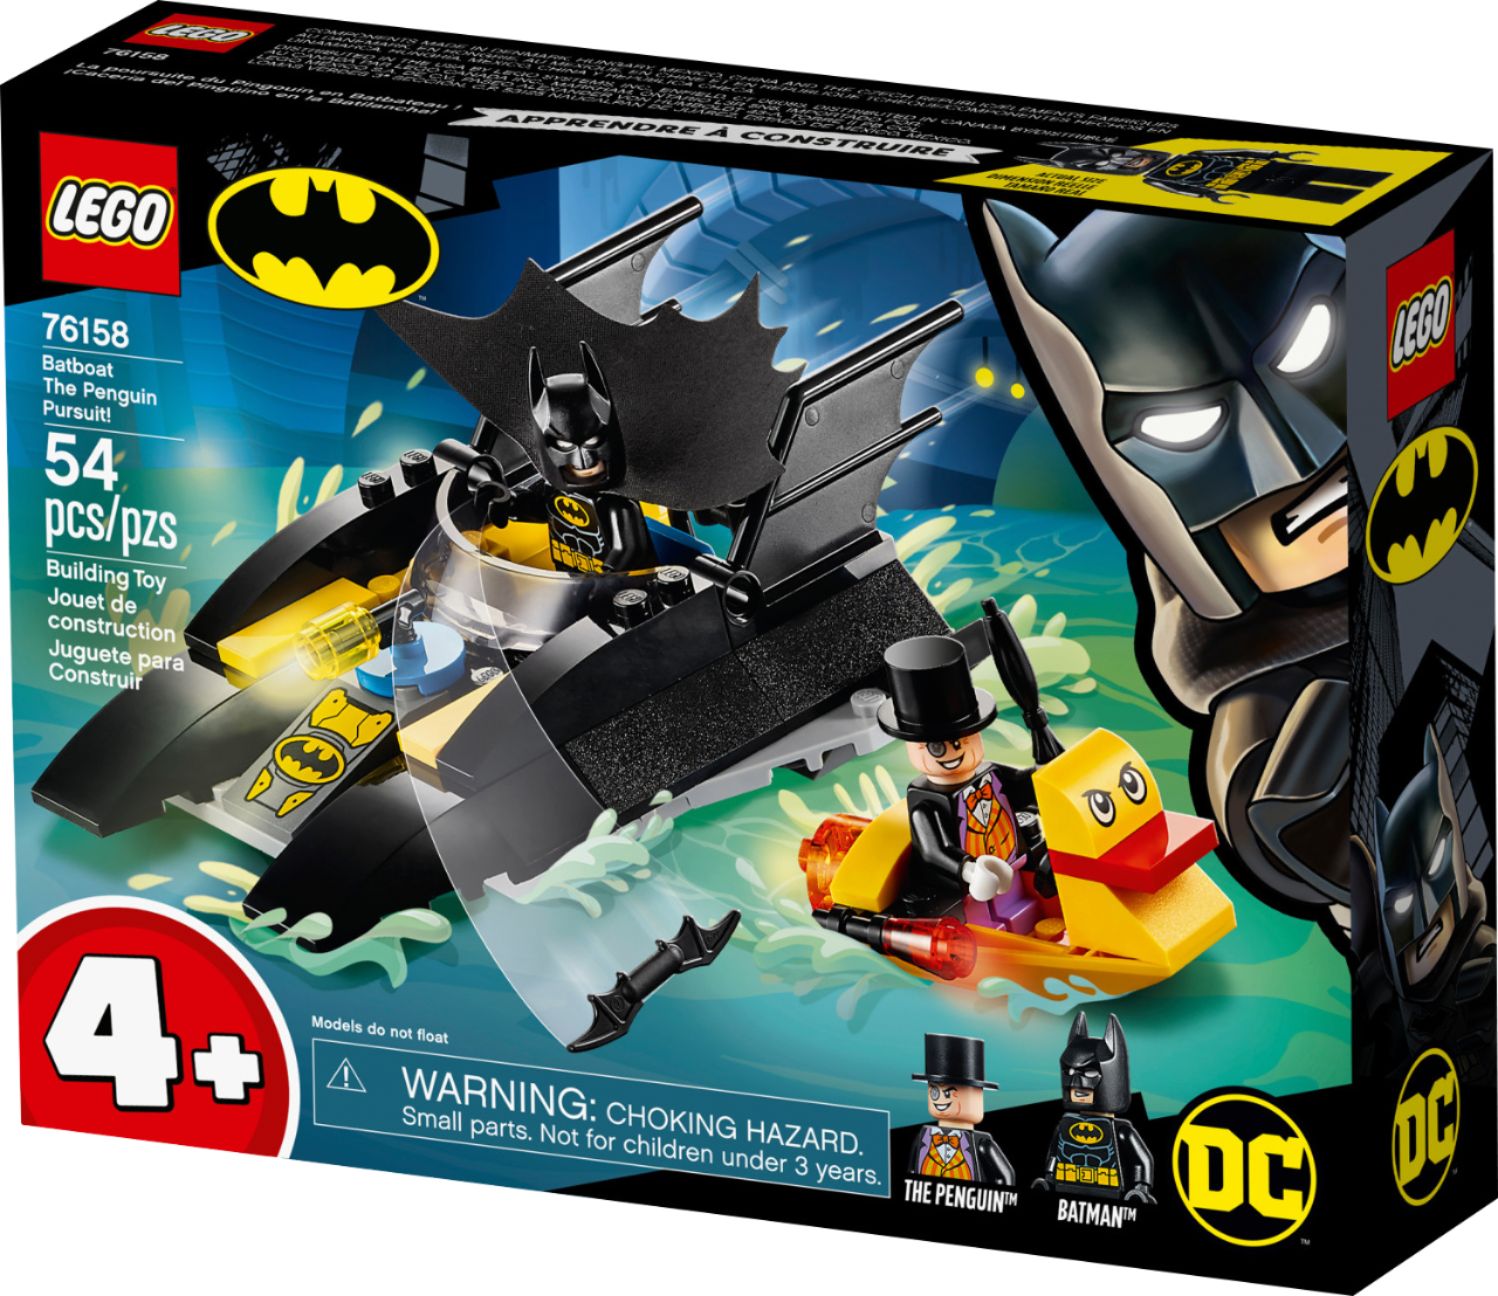 NEW IN BOX! 76158 New LEGO DC Batman Batboat The Penguin Pursuit 